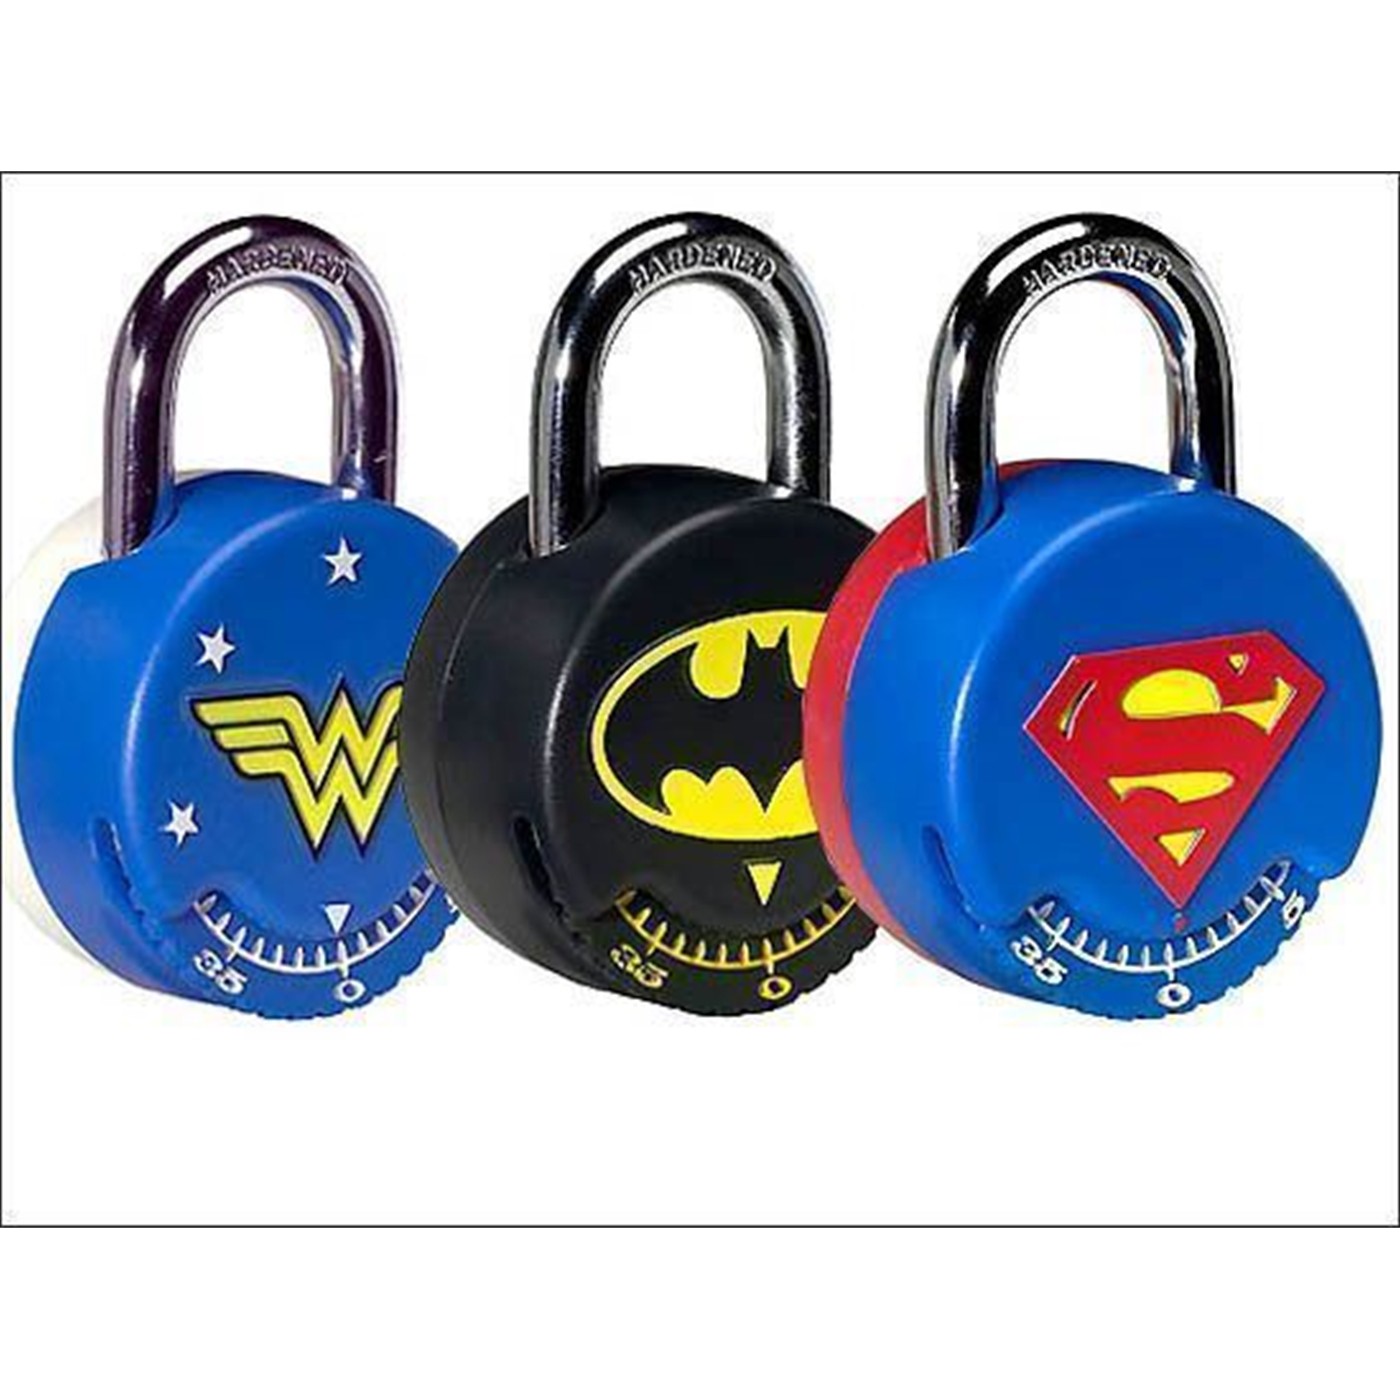 Superman, Batman, Wonder Woman Lock Set